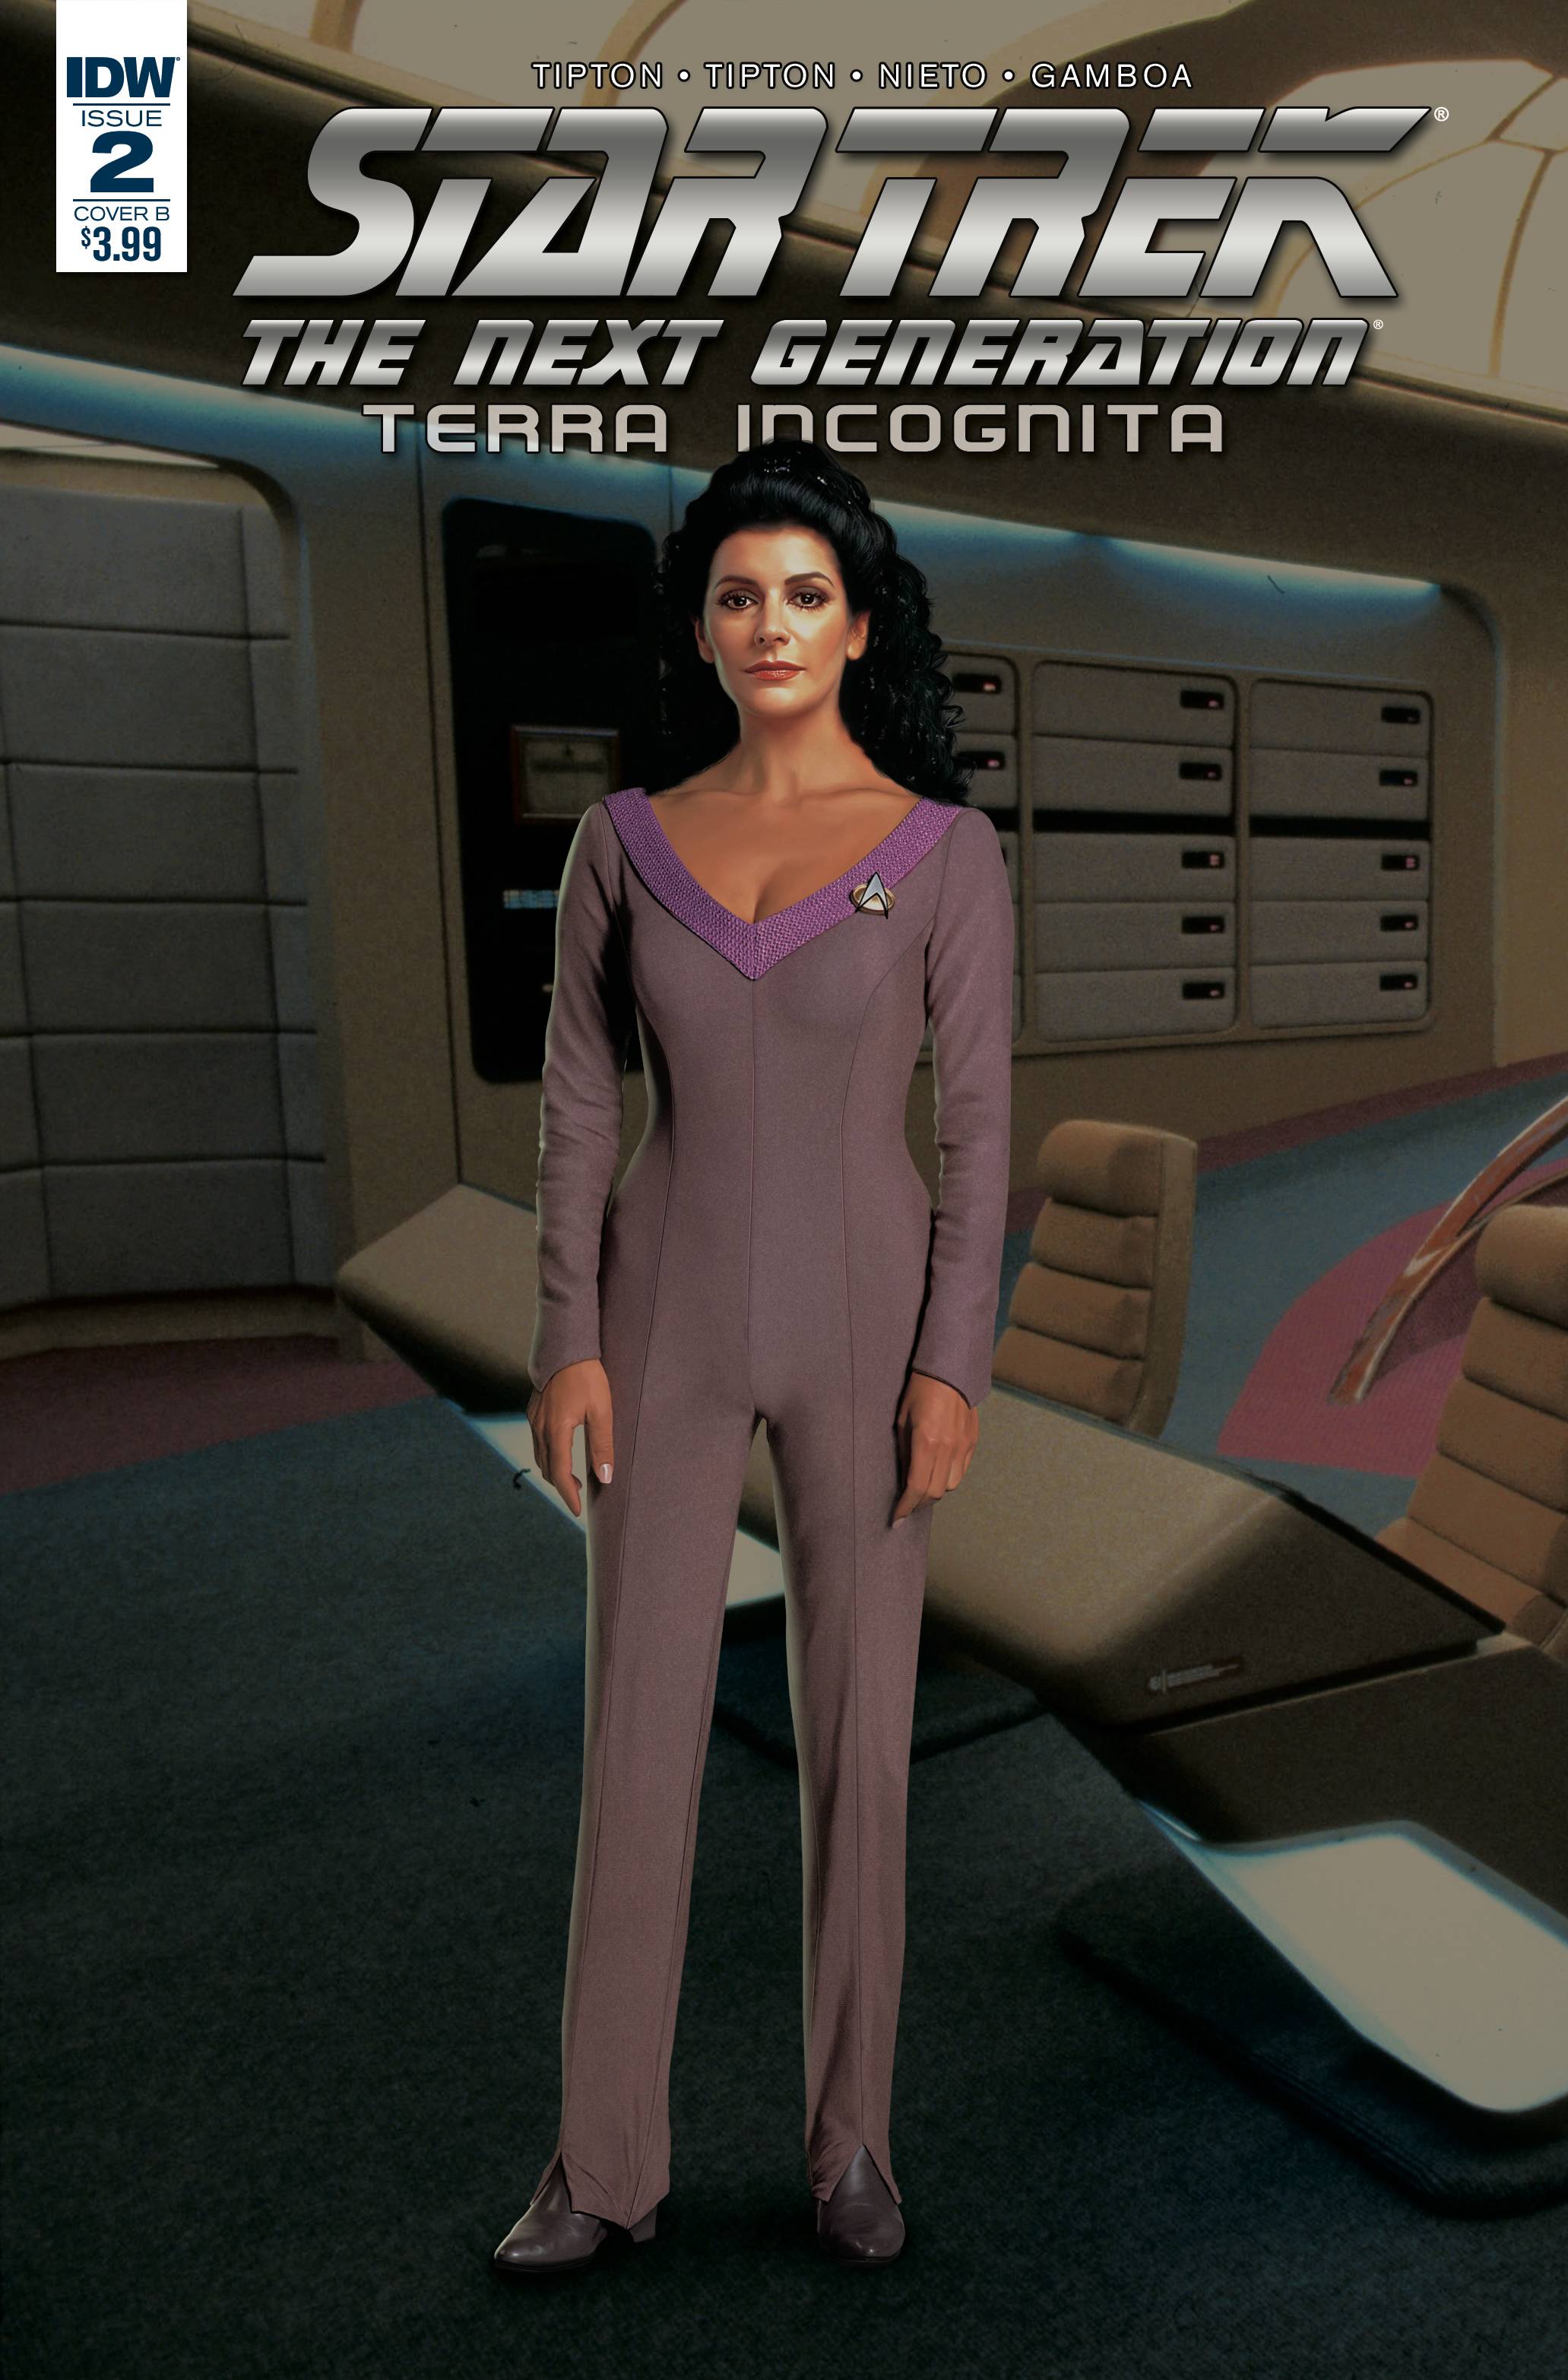 Star Trek Tng Terra Incognita #2 Cover B Photo